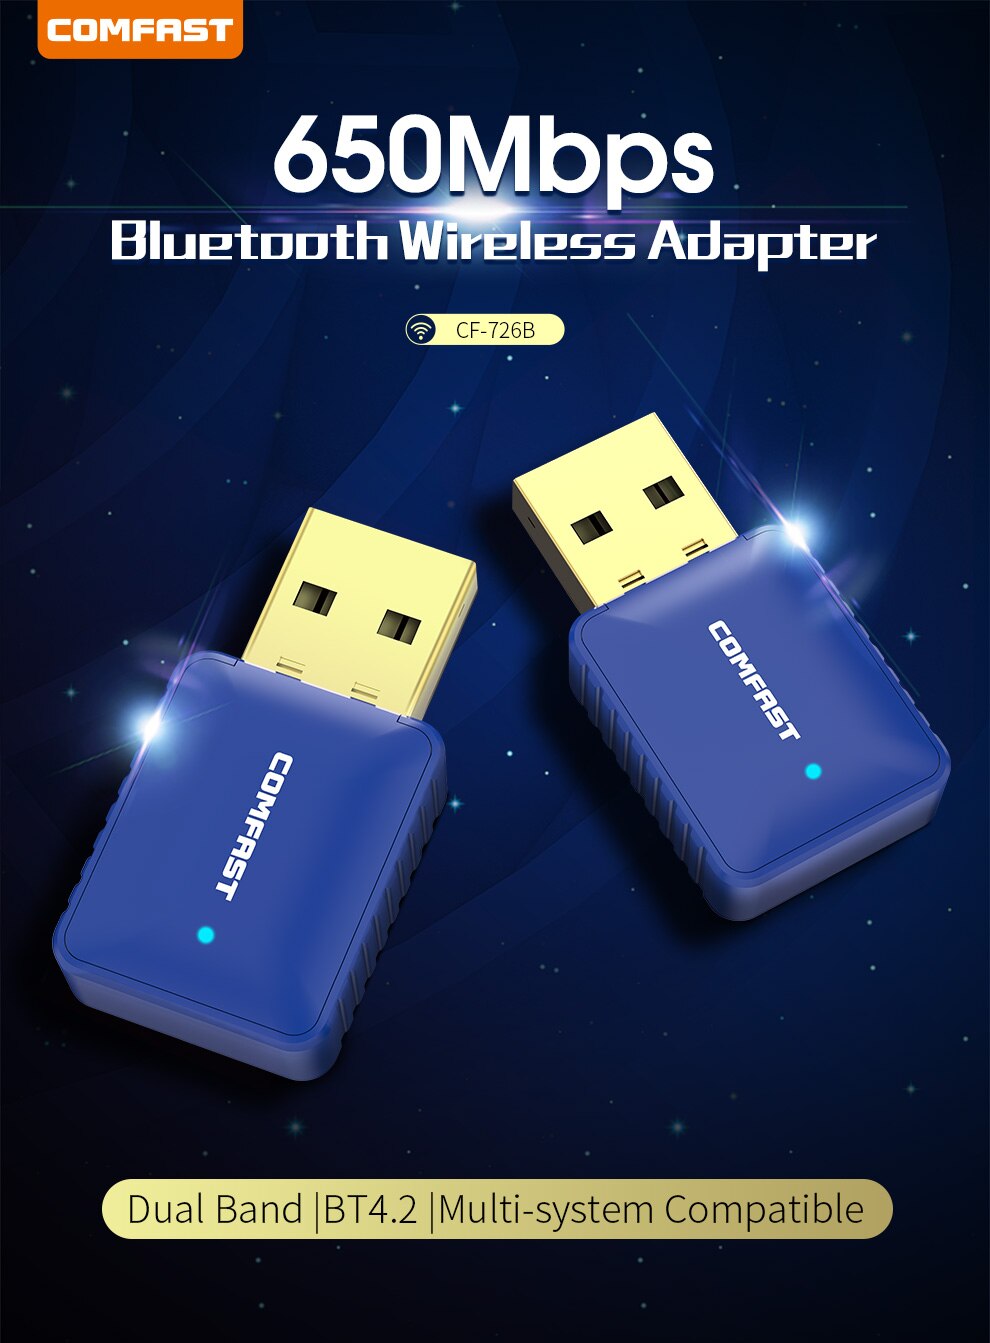 Usb Wifi Bluetooth 4.2 Adapter 650Mbps Dual Band 2.4/5Ghz Draadloze Externe Ontvanger Mini Wifi Dongle Voor pc/Laptop/Desktop